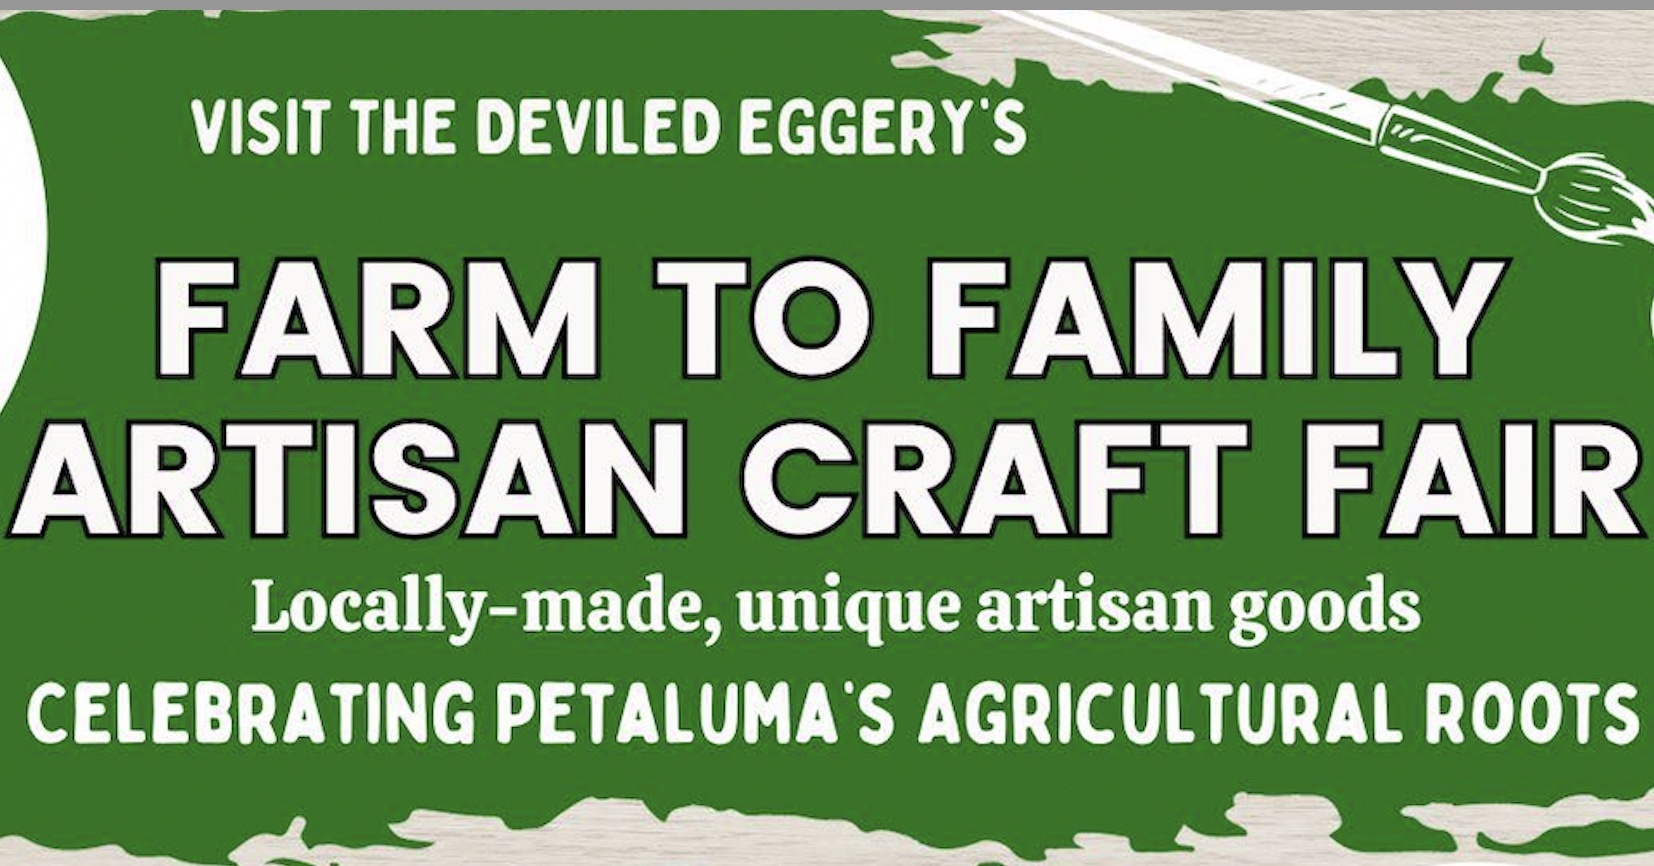 Deviled Eggery Farm to Family Artisan Craft Fair, Petaluma, California, United States